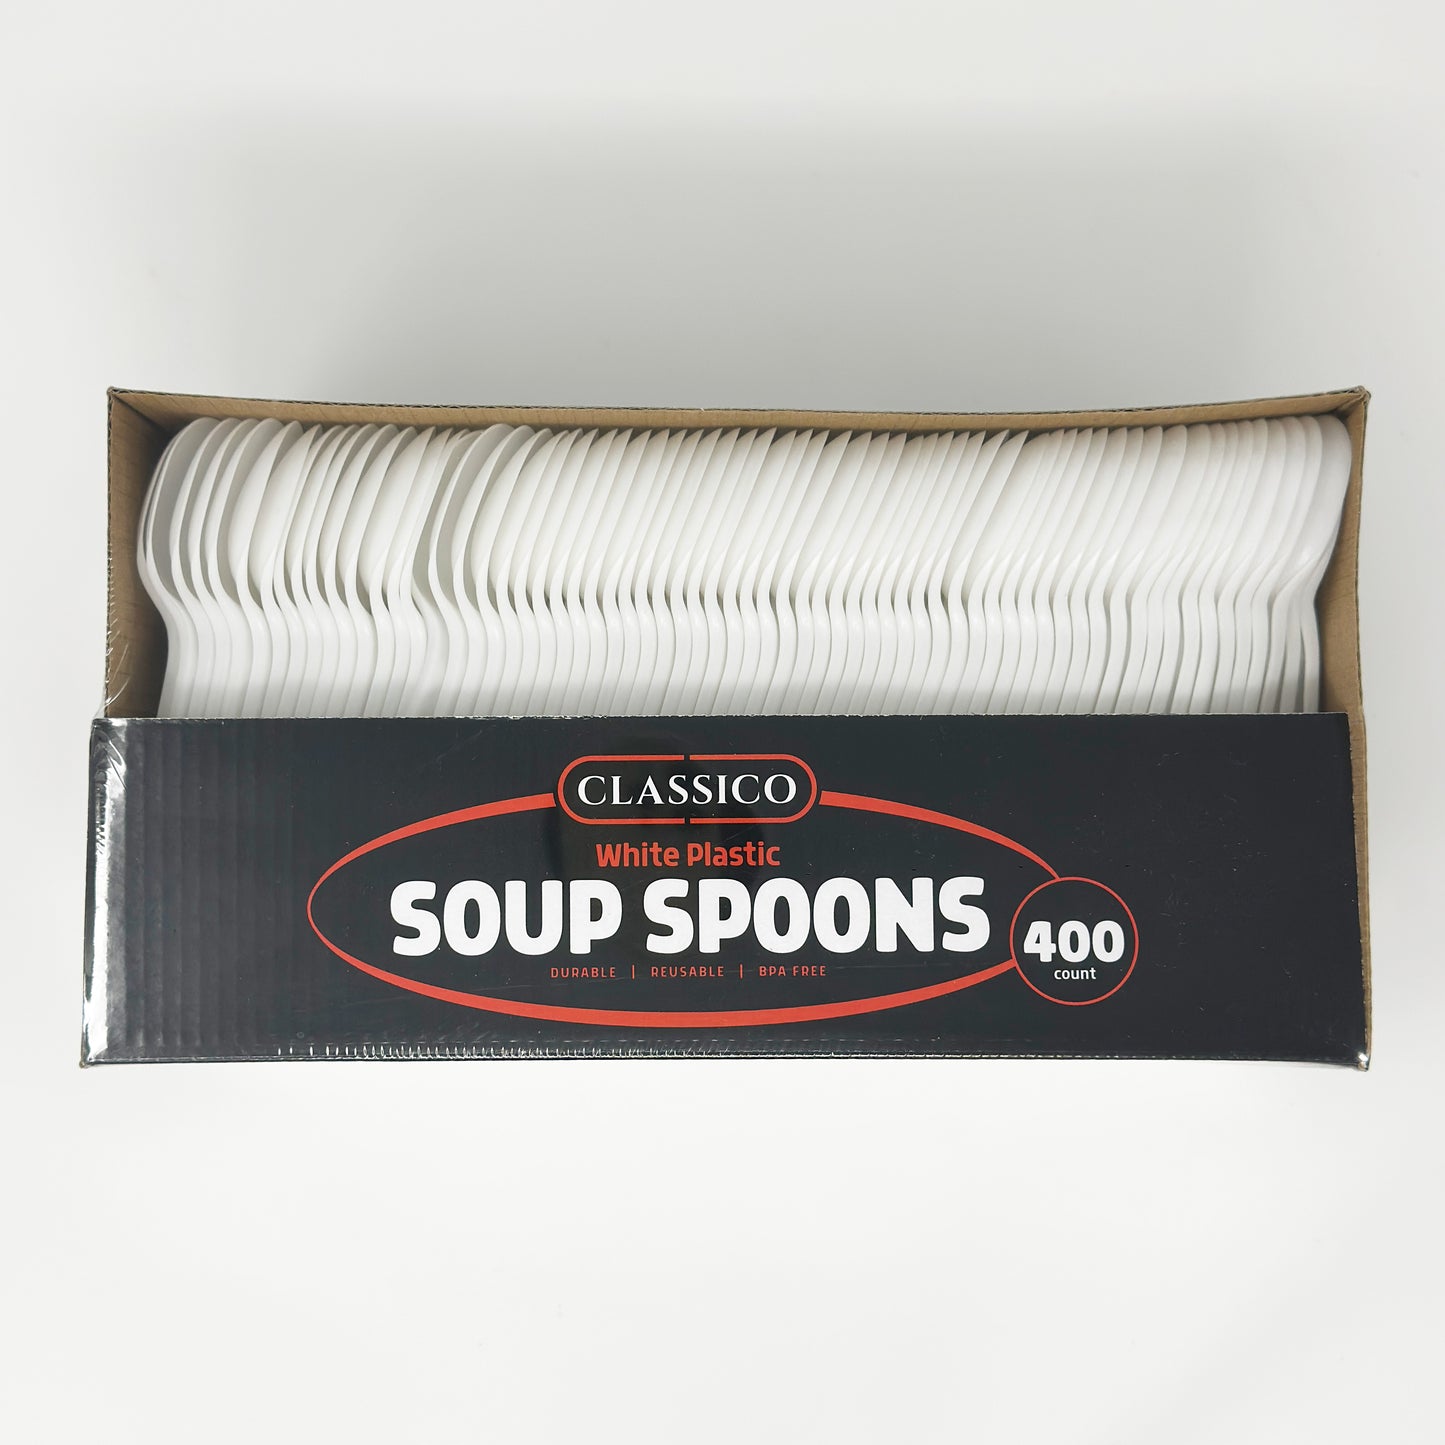 Classico Soup Spoons 400ct